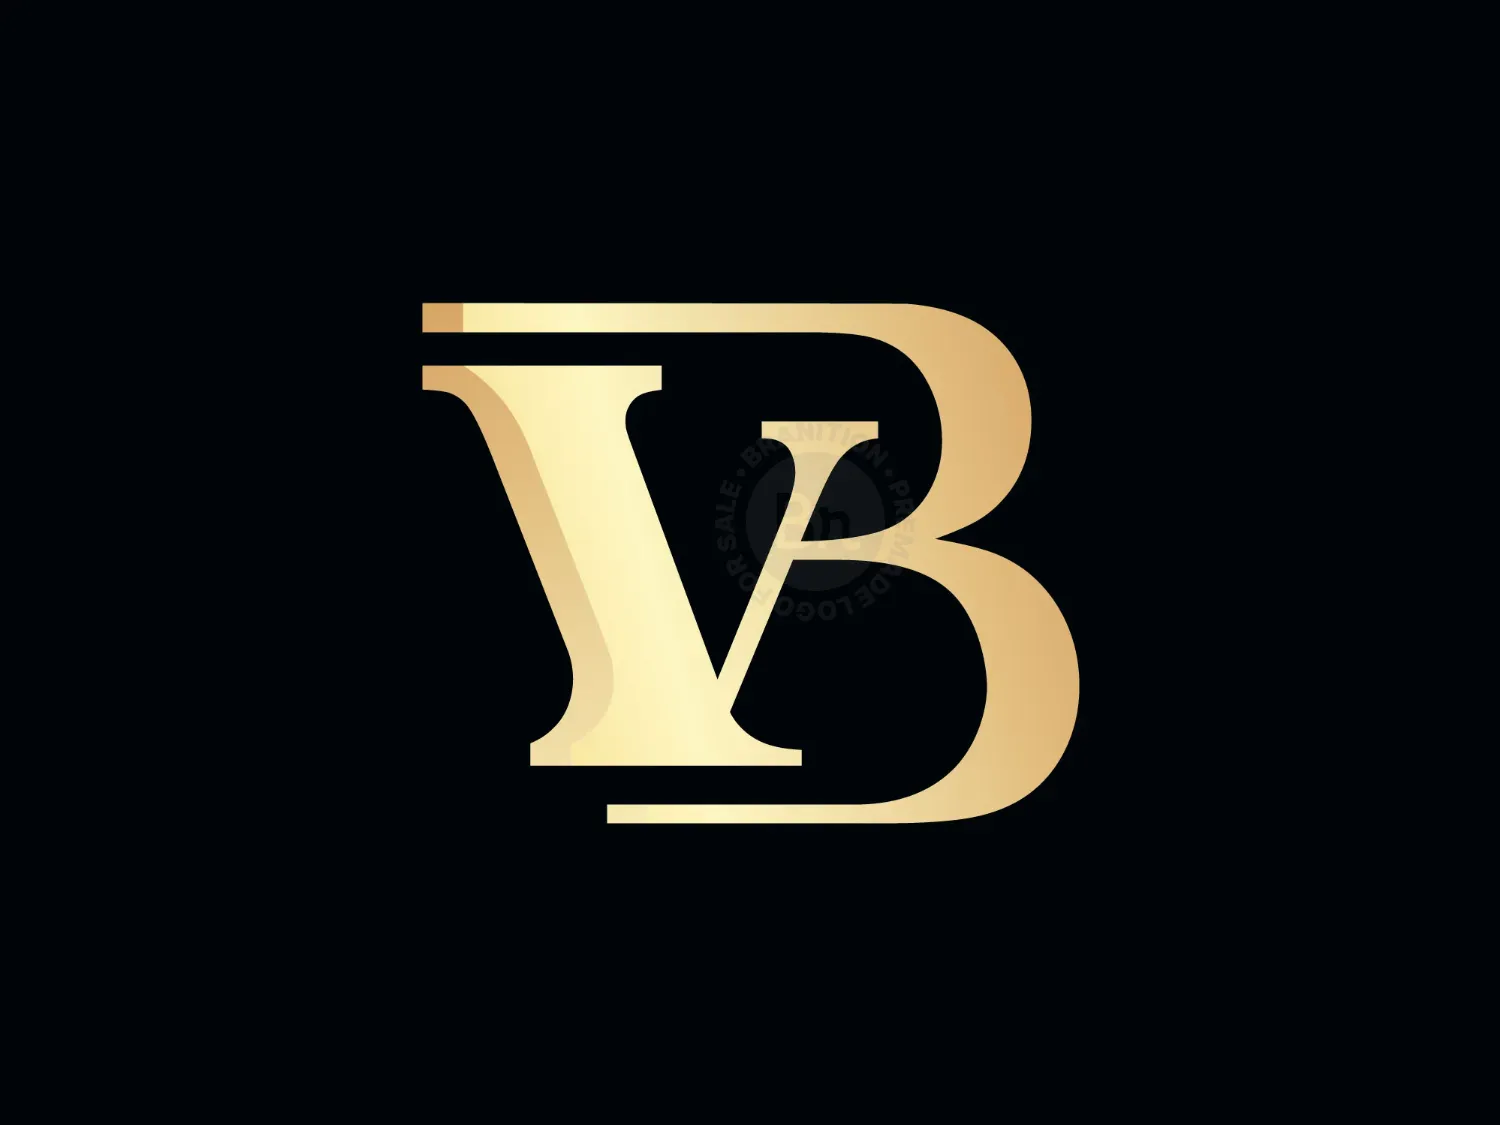 Professional 3D VB logo design on android mobile, Pixellab tutorial  [ASRAFUL ART] - YouTube